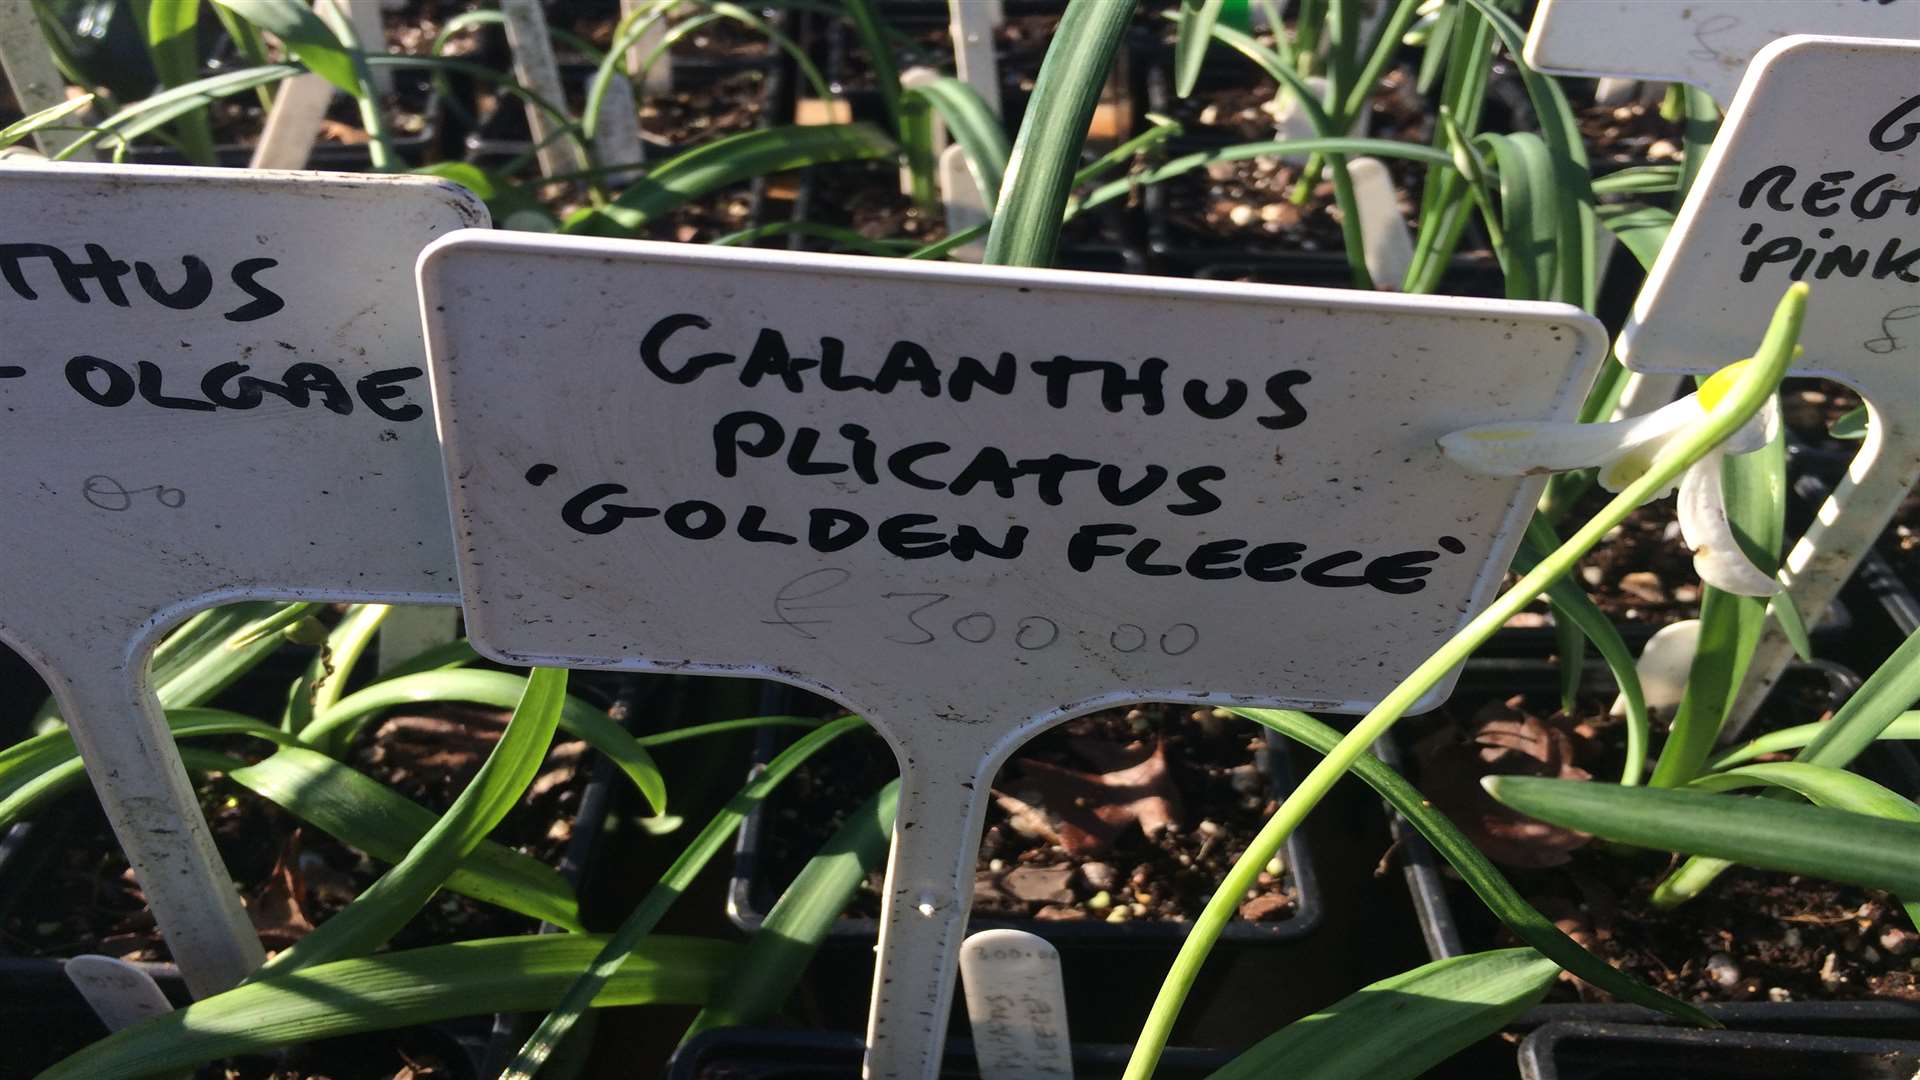 Galanthus plicates ‘Golden Fleece’ looked a snip at £300!